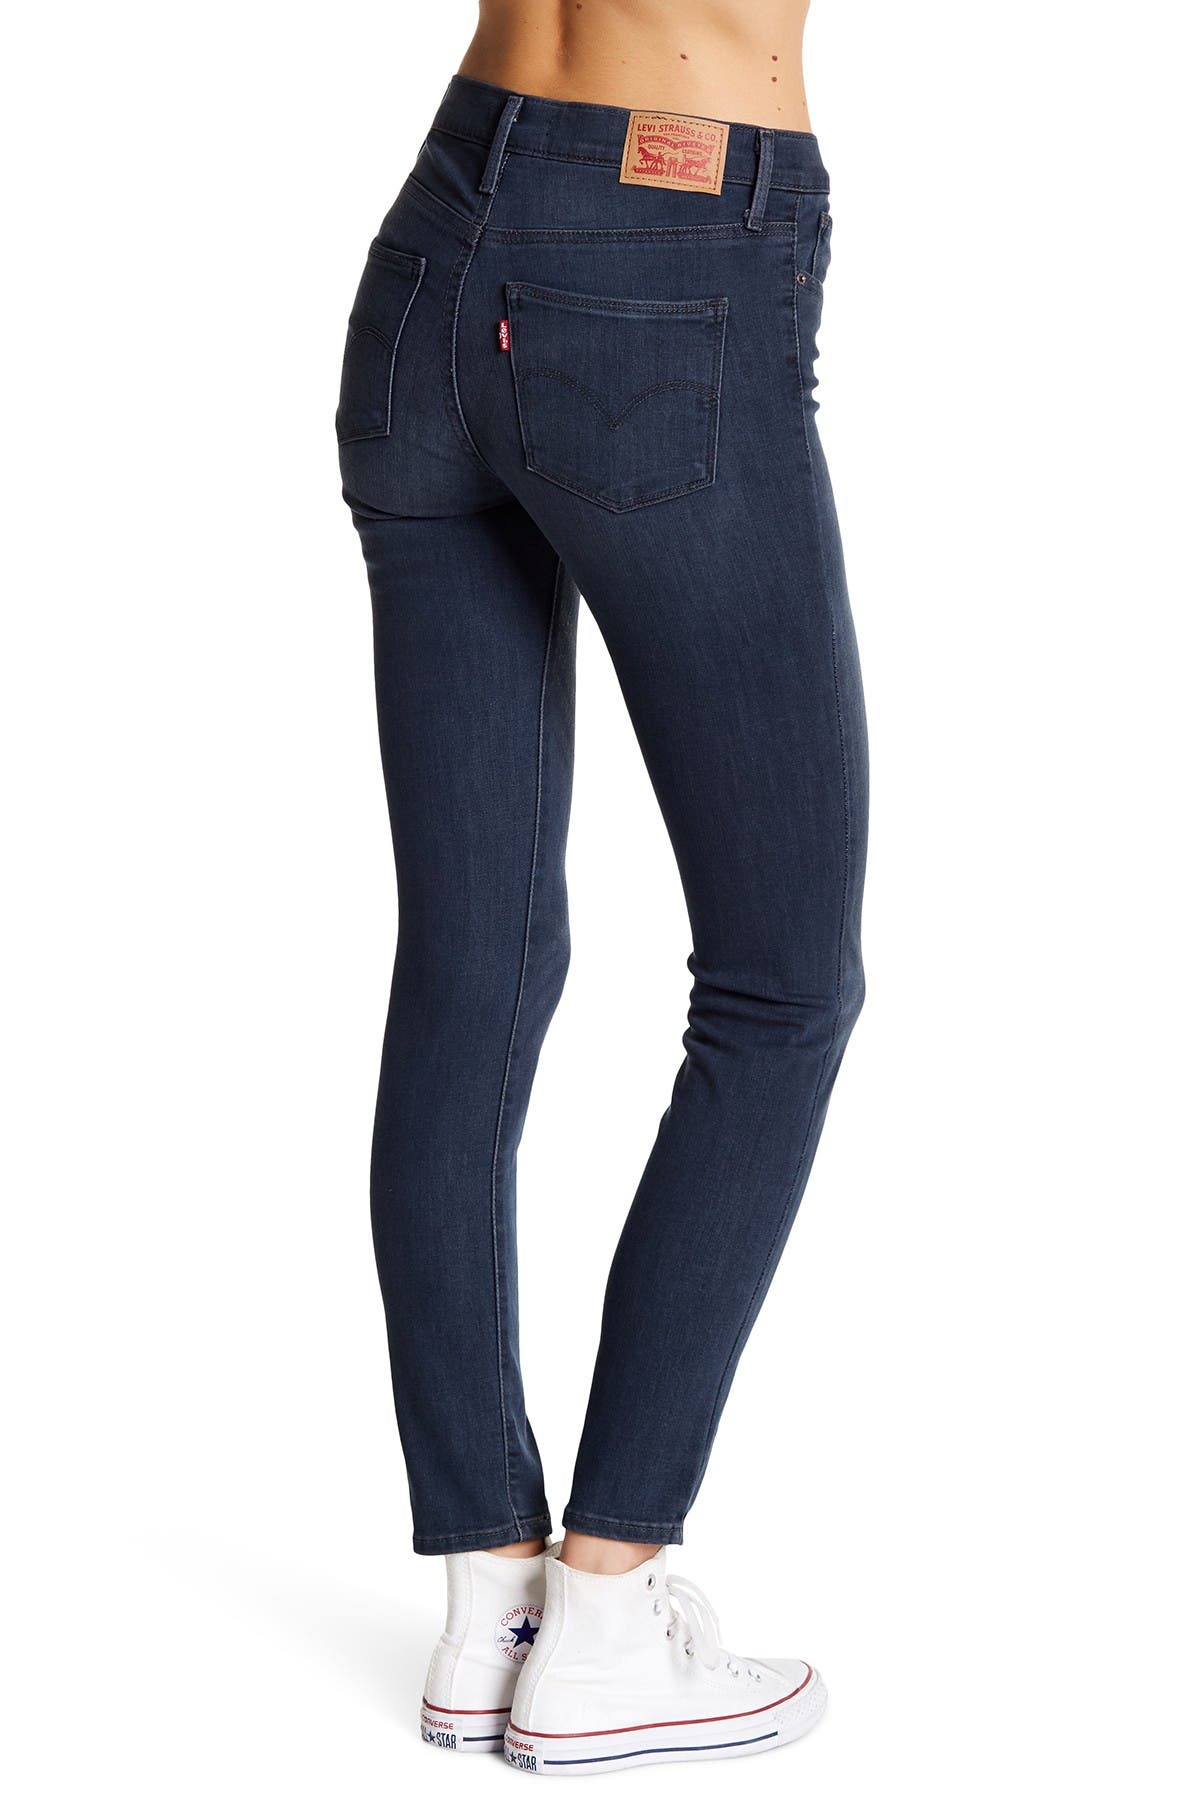 levi's women's slimming skinny jeans